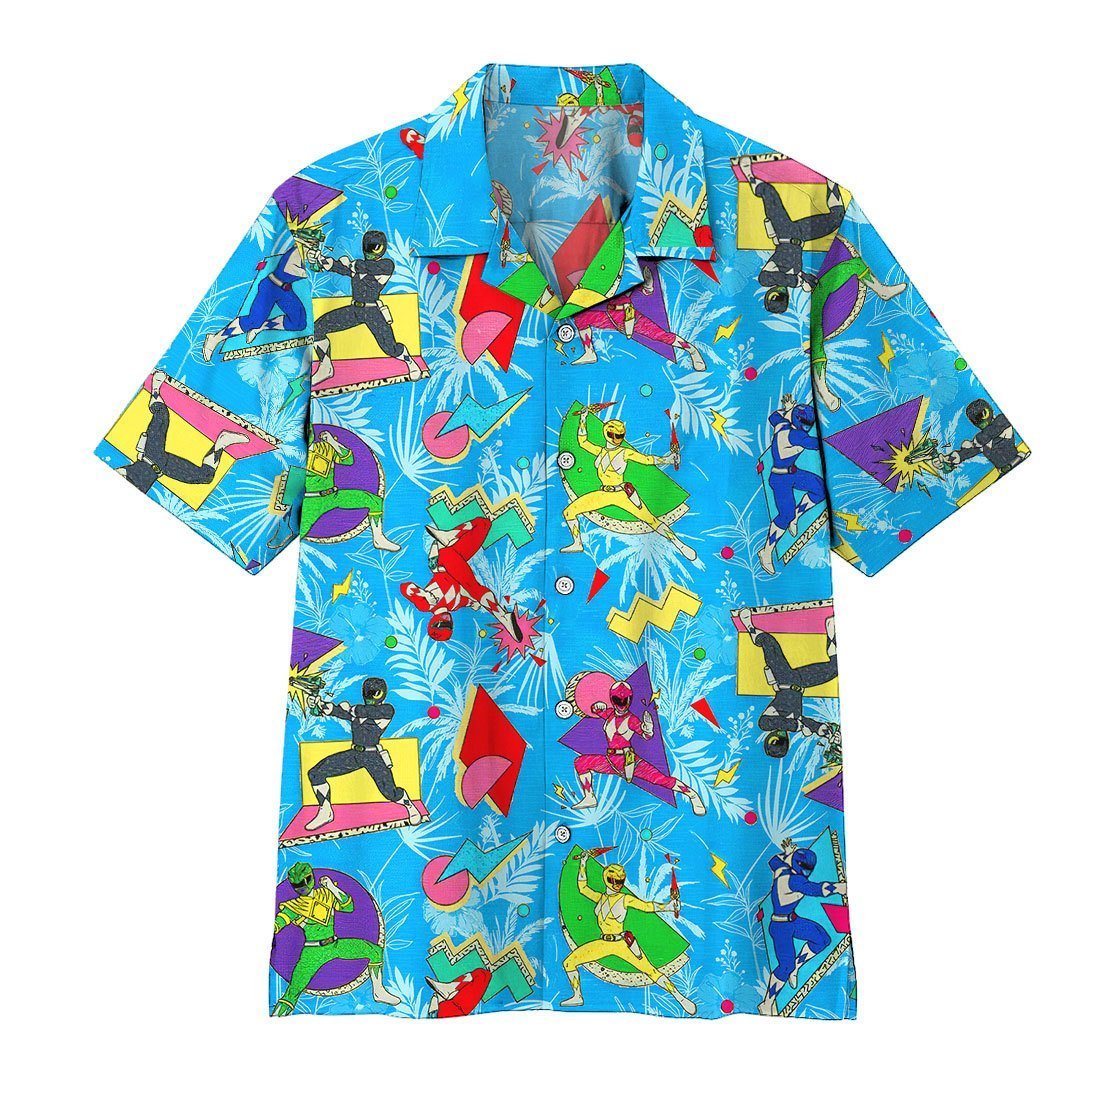 Mighty Morphin Power Ranger Hawaii Shirt